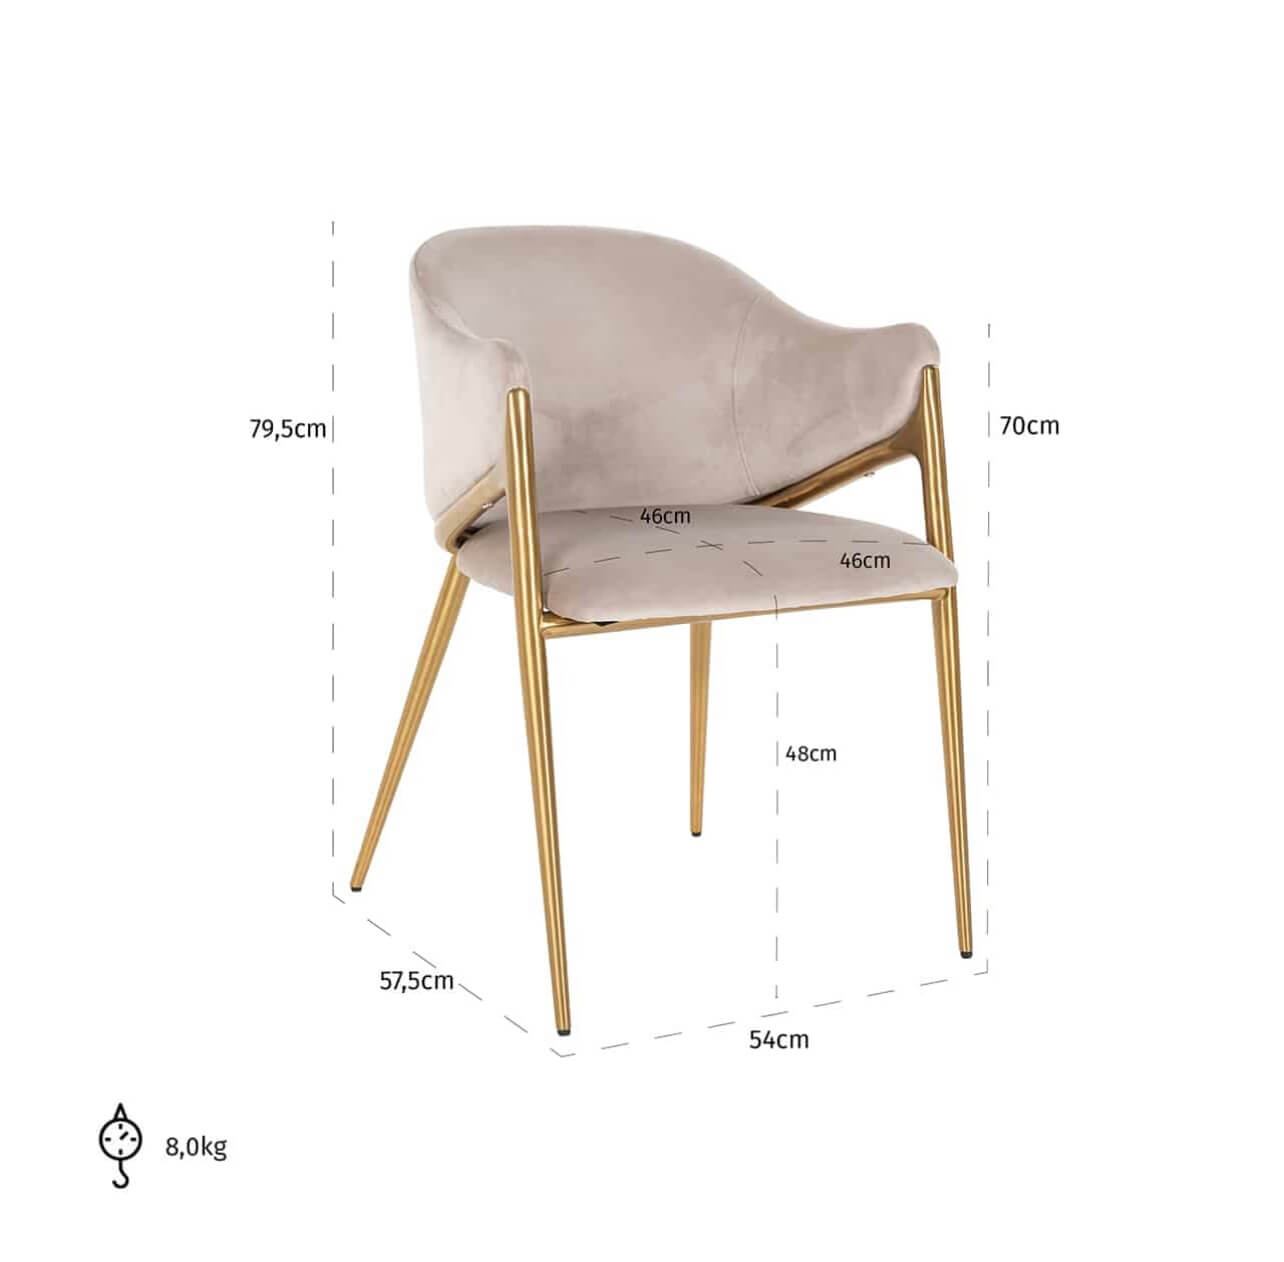 Luxury Brass & Mink Velvet Chair